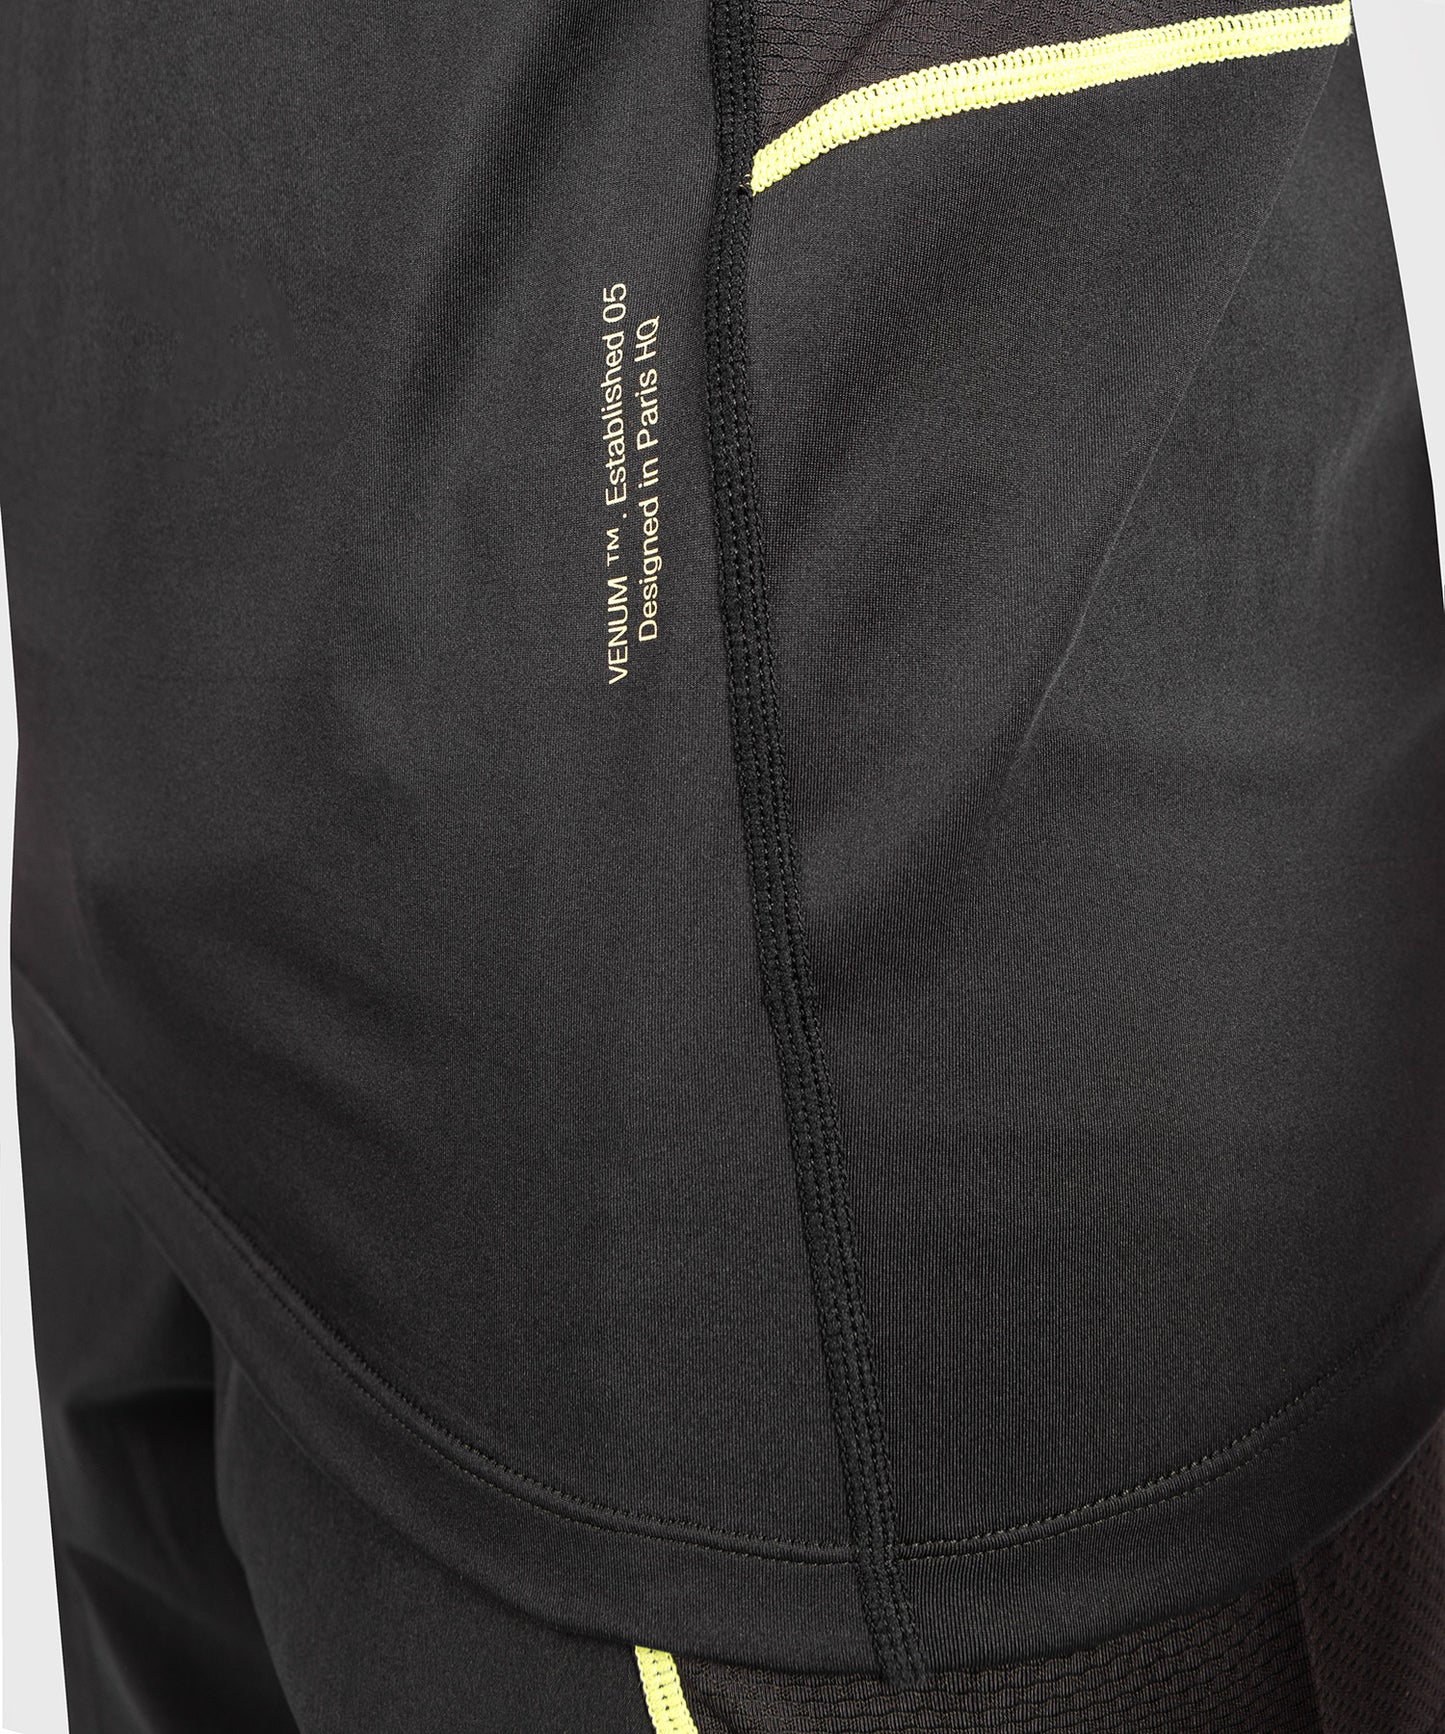 Venum Fusion 2.0  Men Dry Tech T-Shirt - Black/Yellow